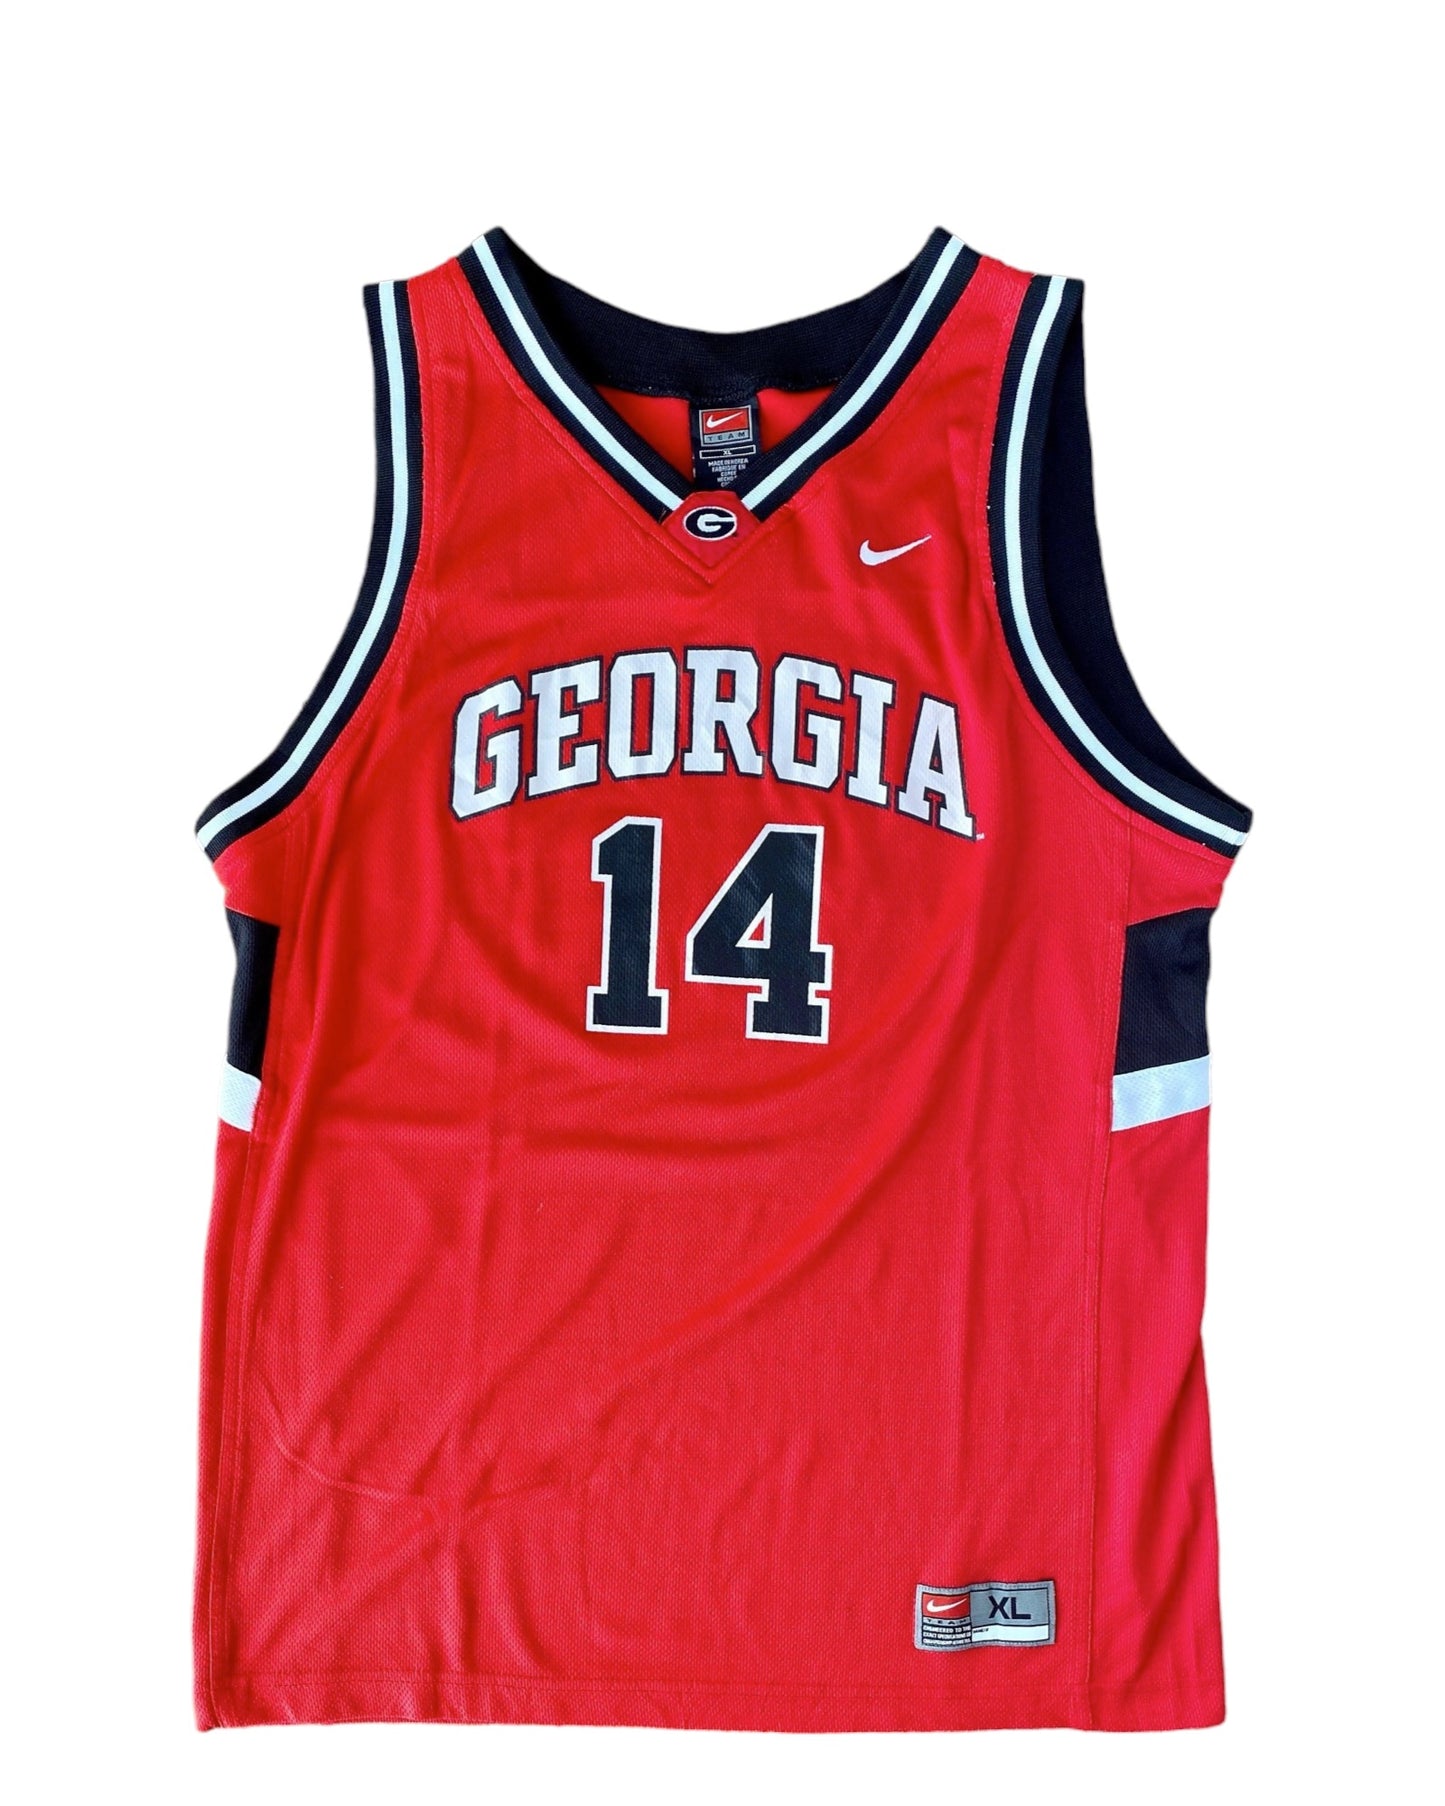 Youth XL. Vintage Nike NBA Georgia jersey #14